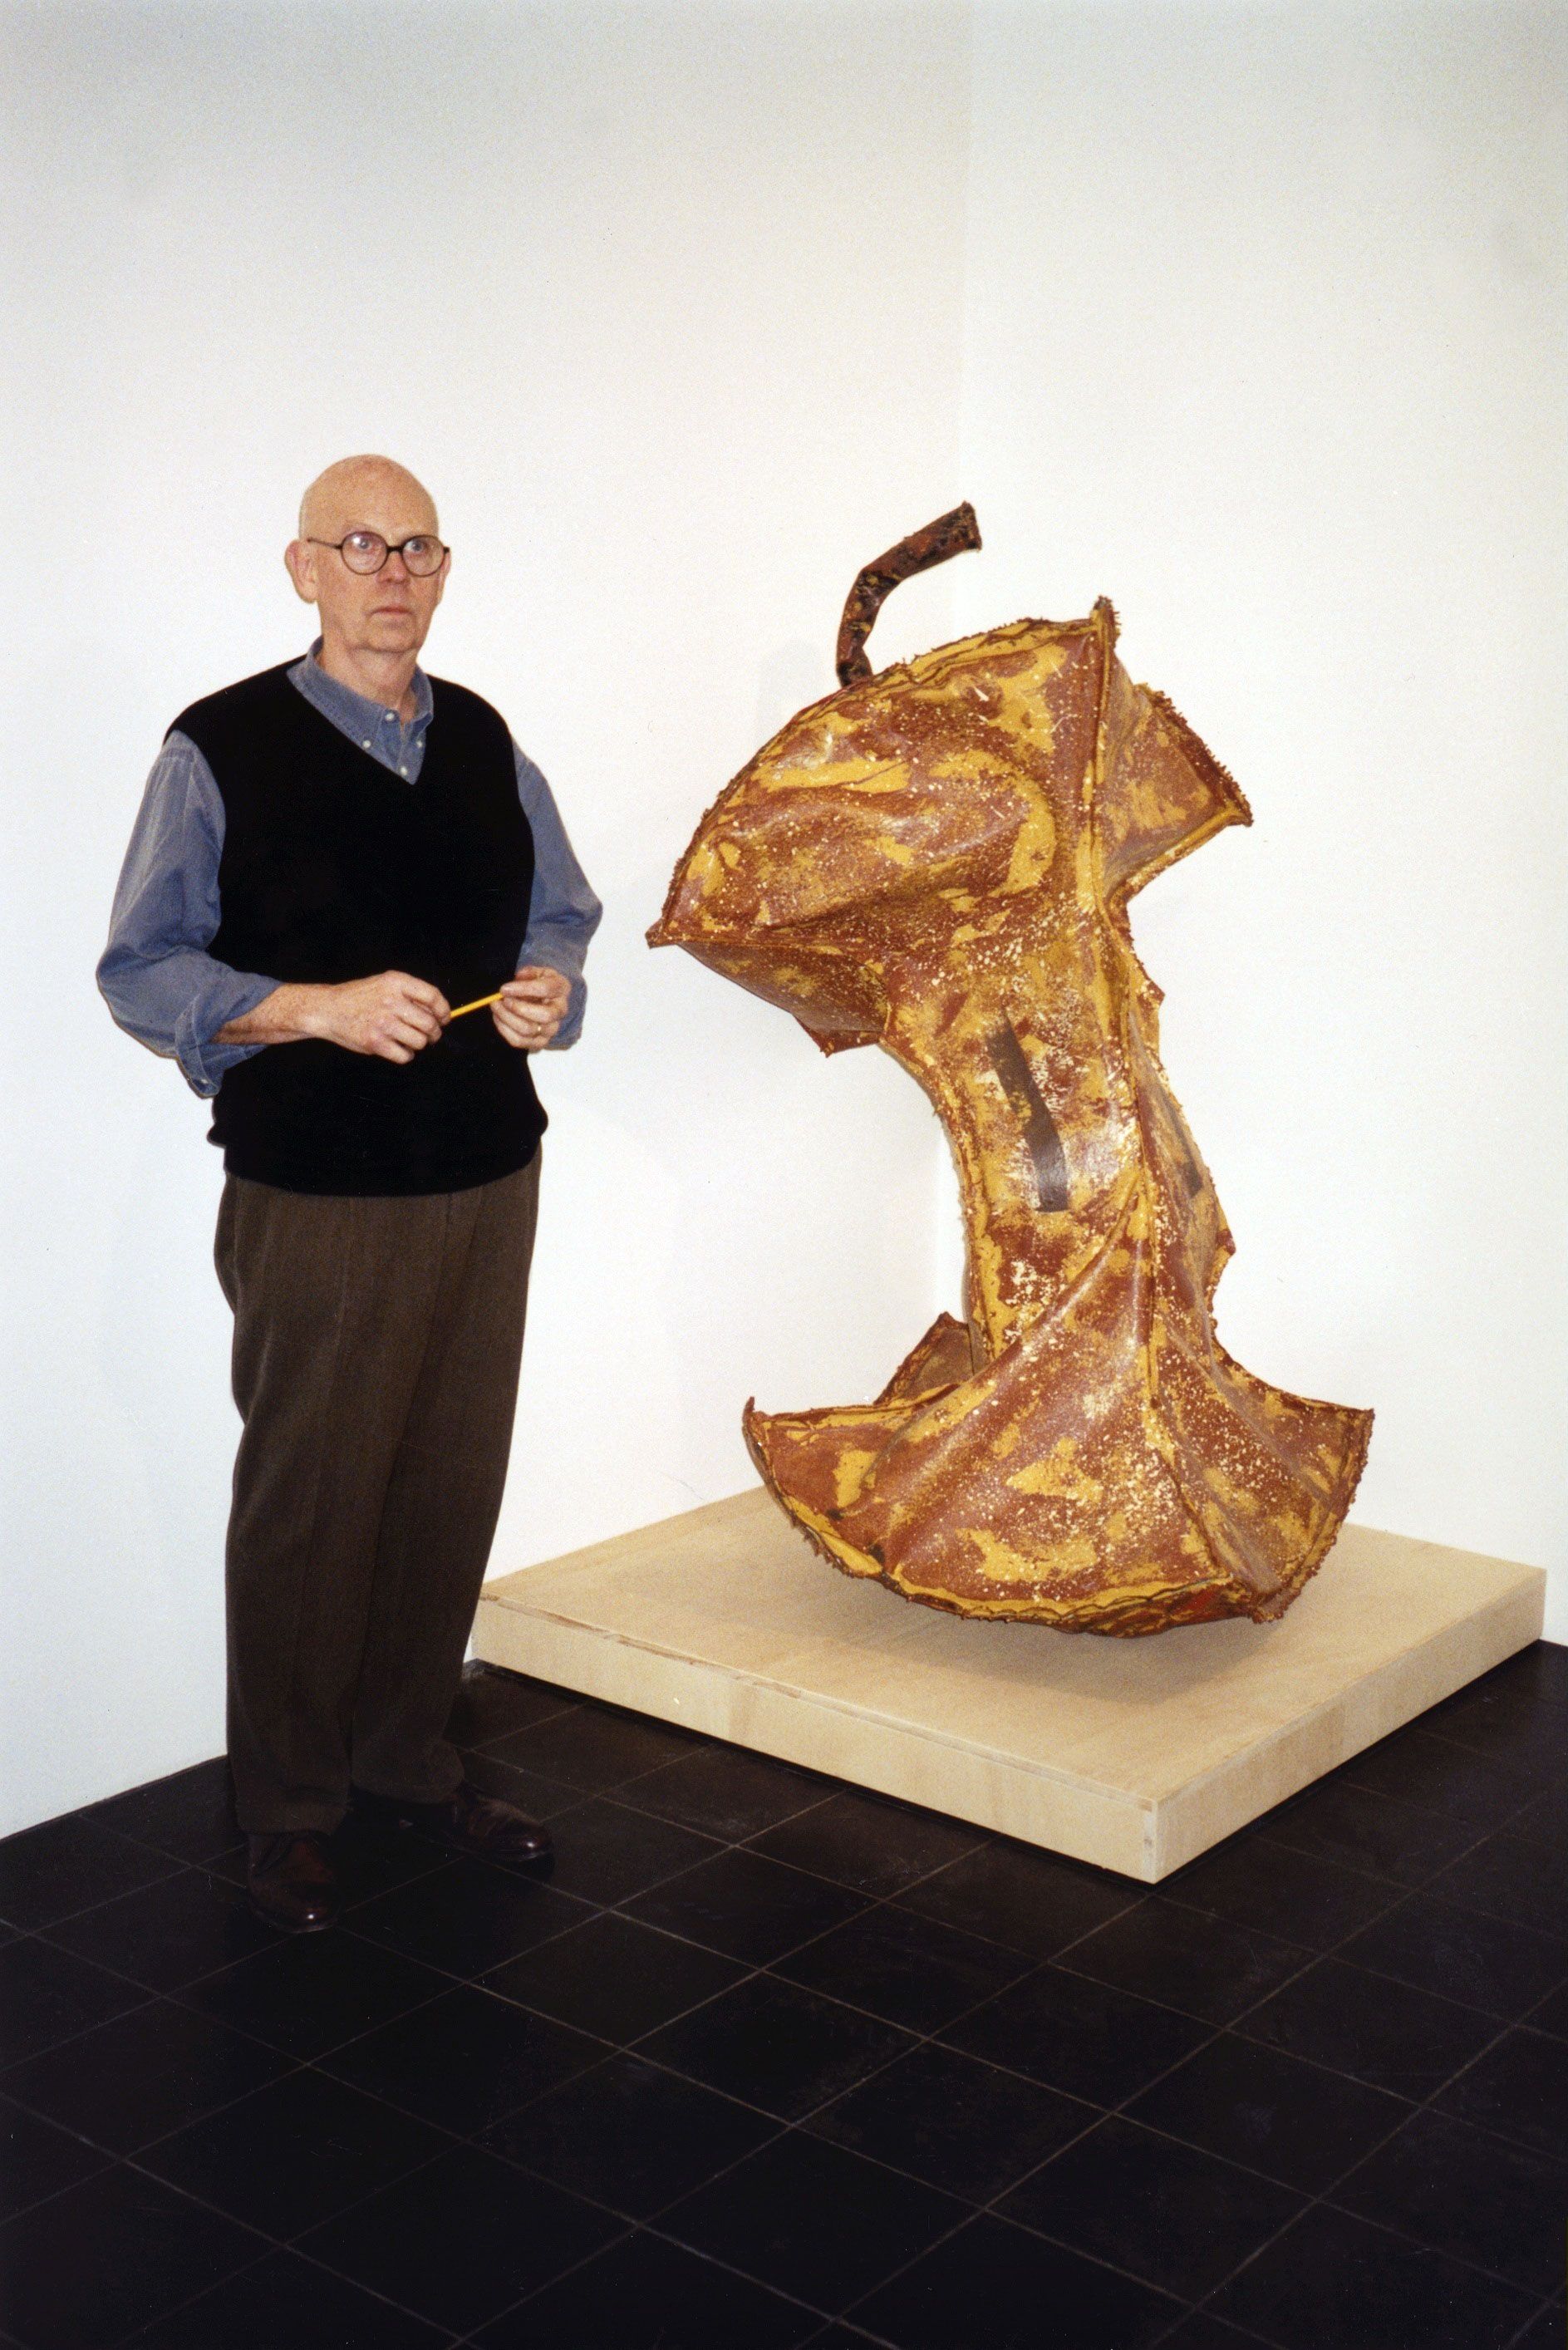 Claes Oldenburg, Pop Art Sculptor, Dead at 93